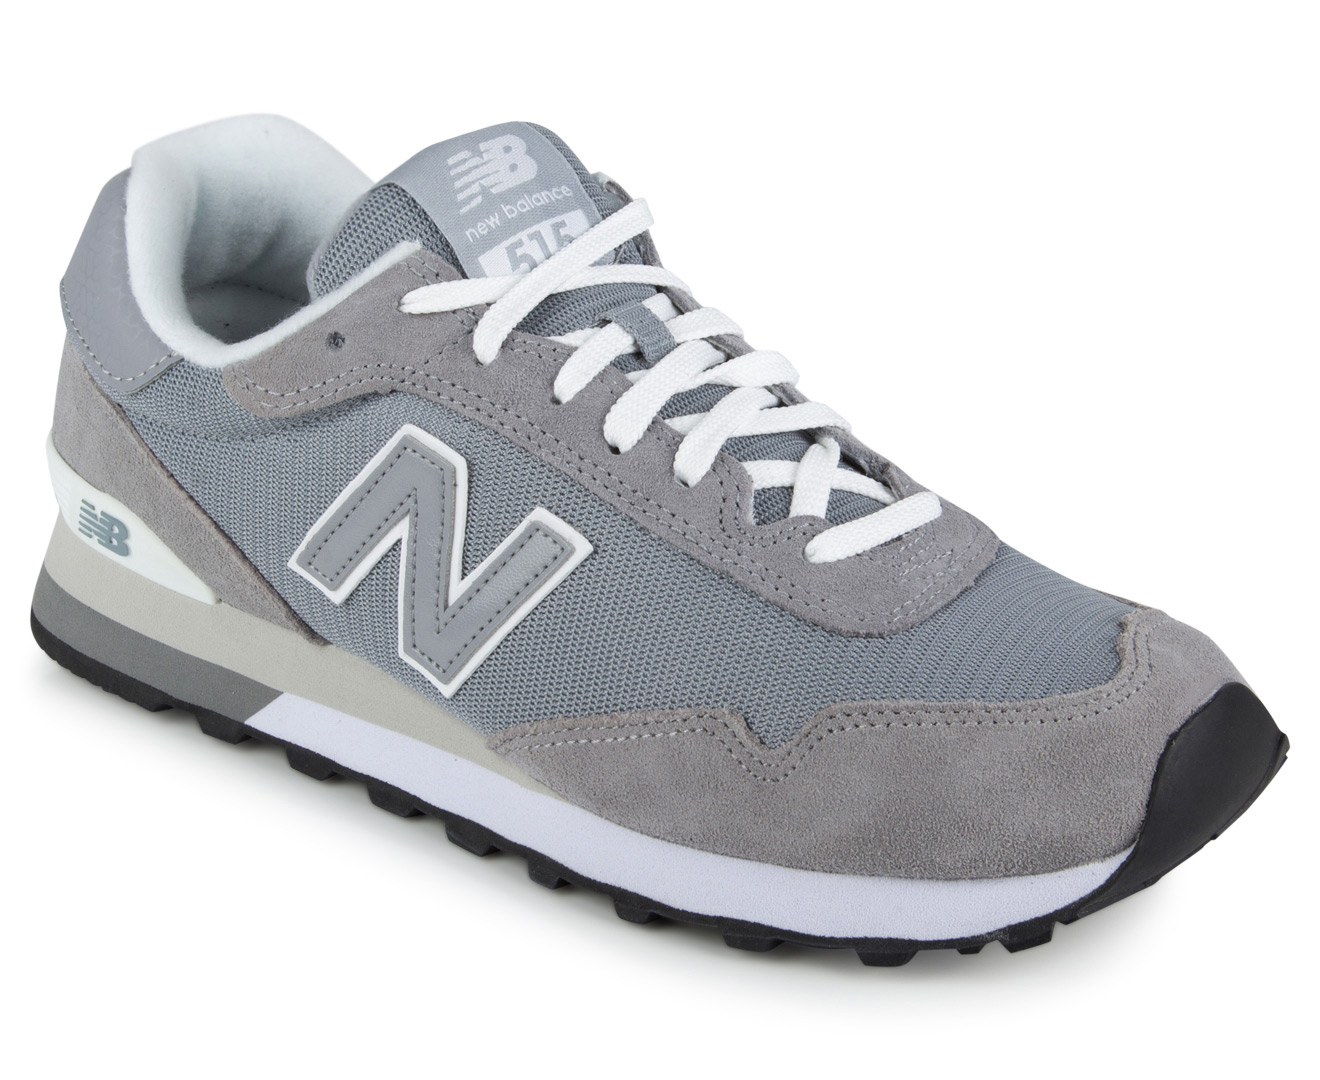 New Balance Men's Classics 515 Sneaker - Light Grey | Catch.com.au